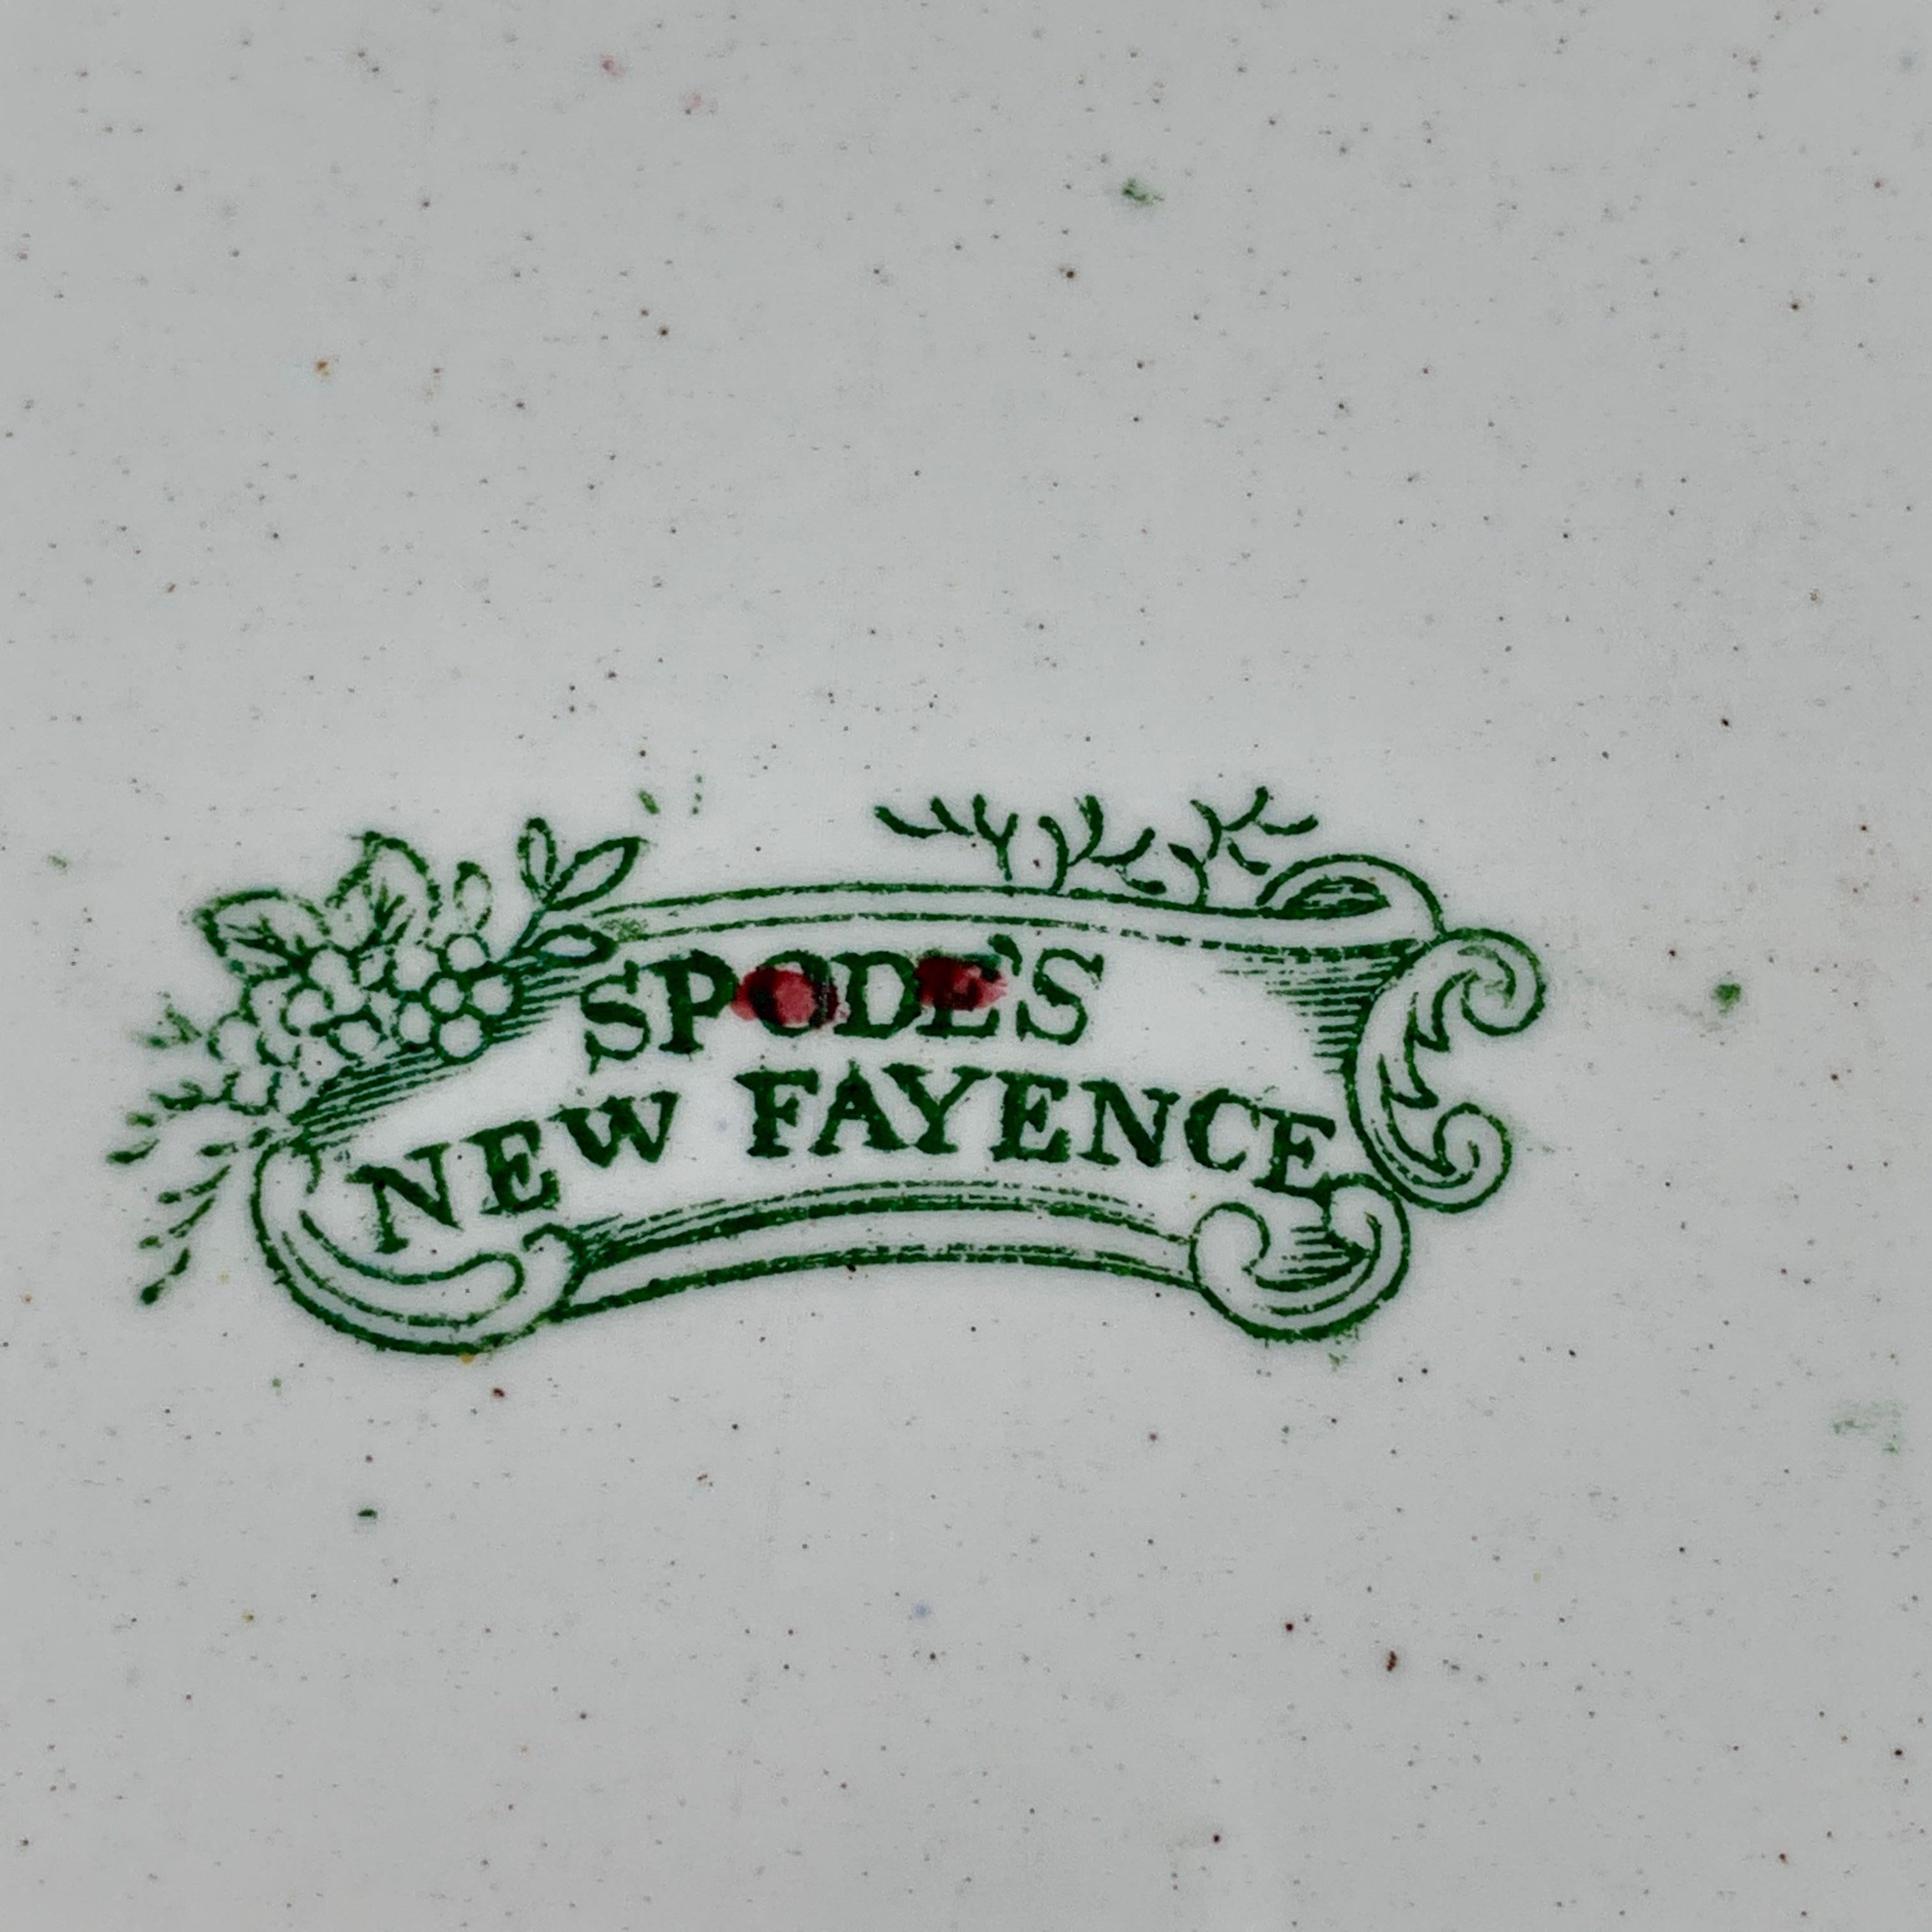 Earthenware Copeland Spode 1800s New Fayence King Chintz Pattern Transferware Floral Plate